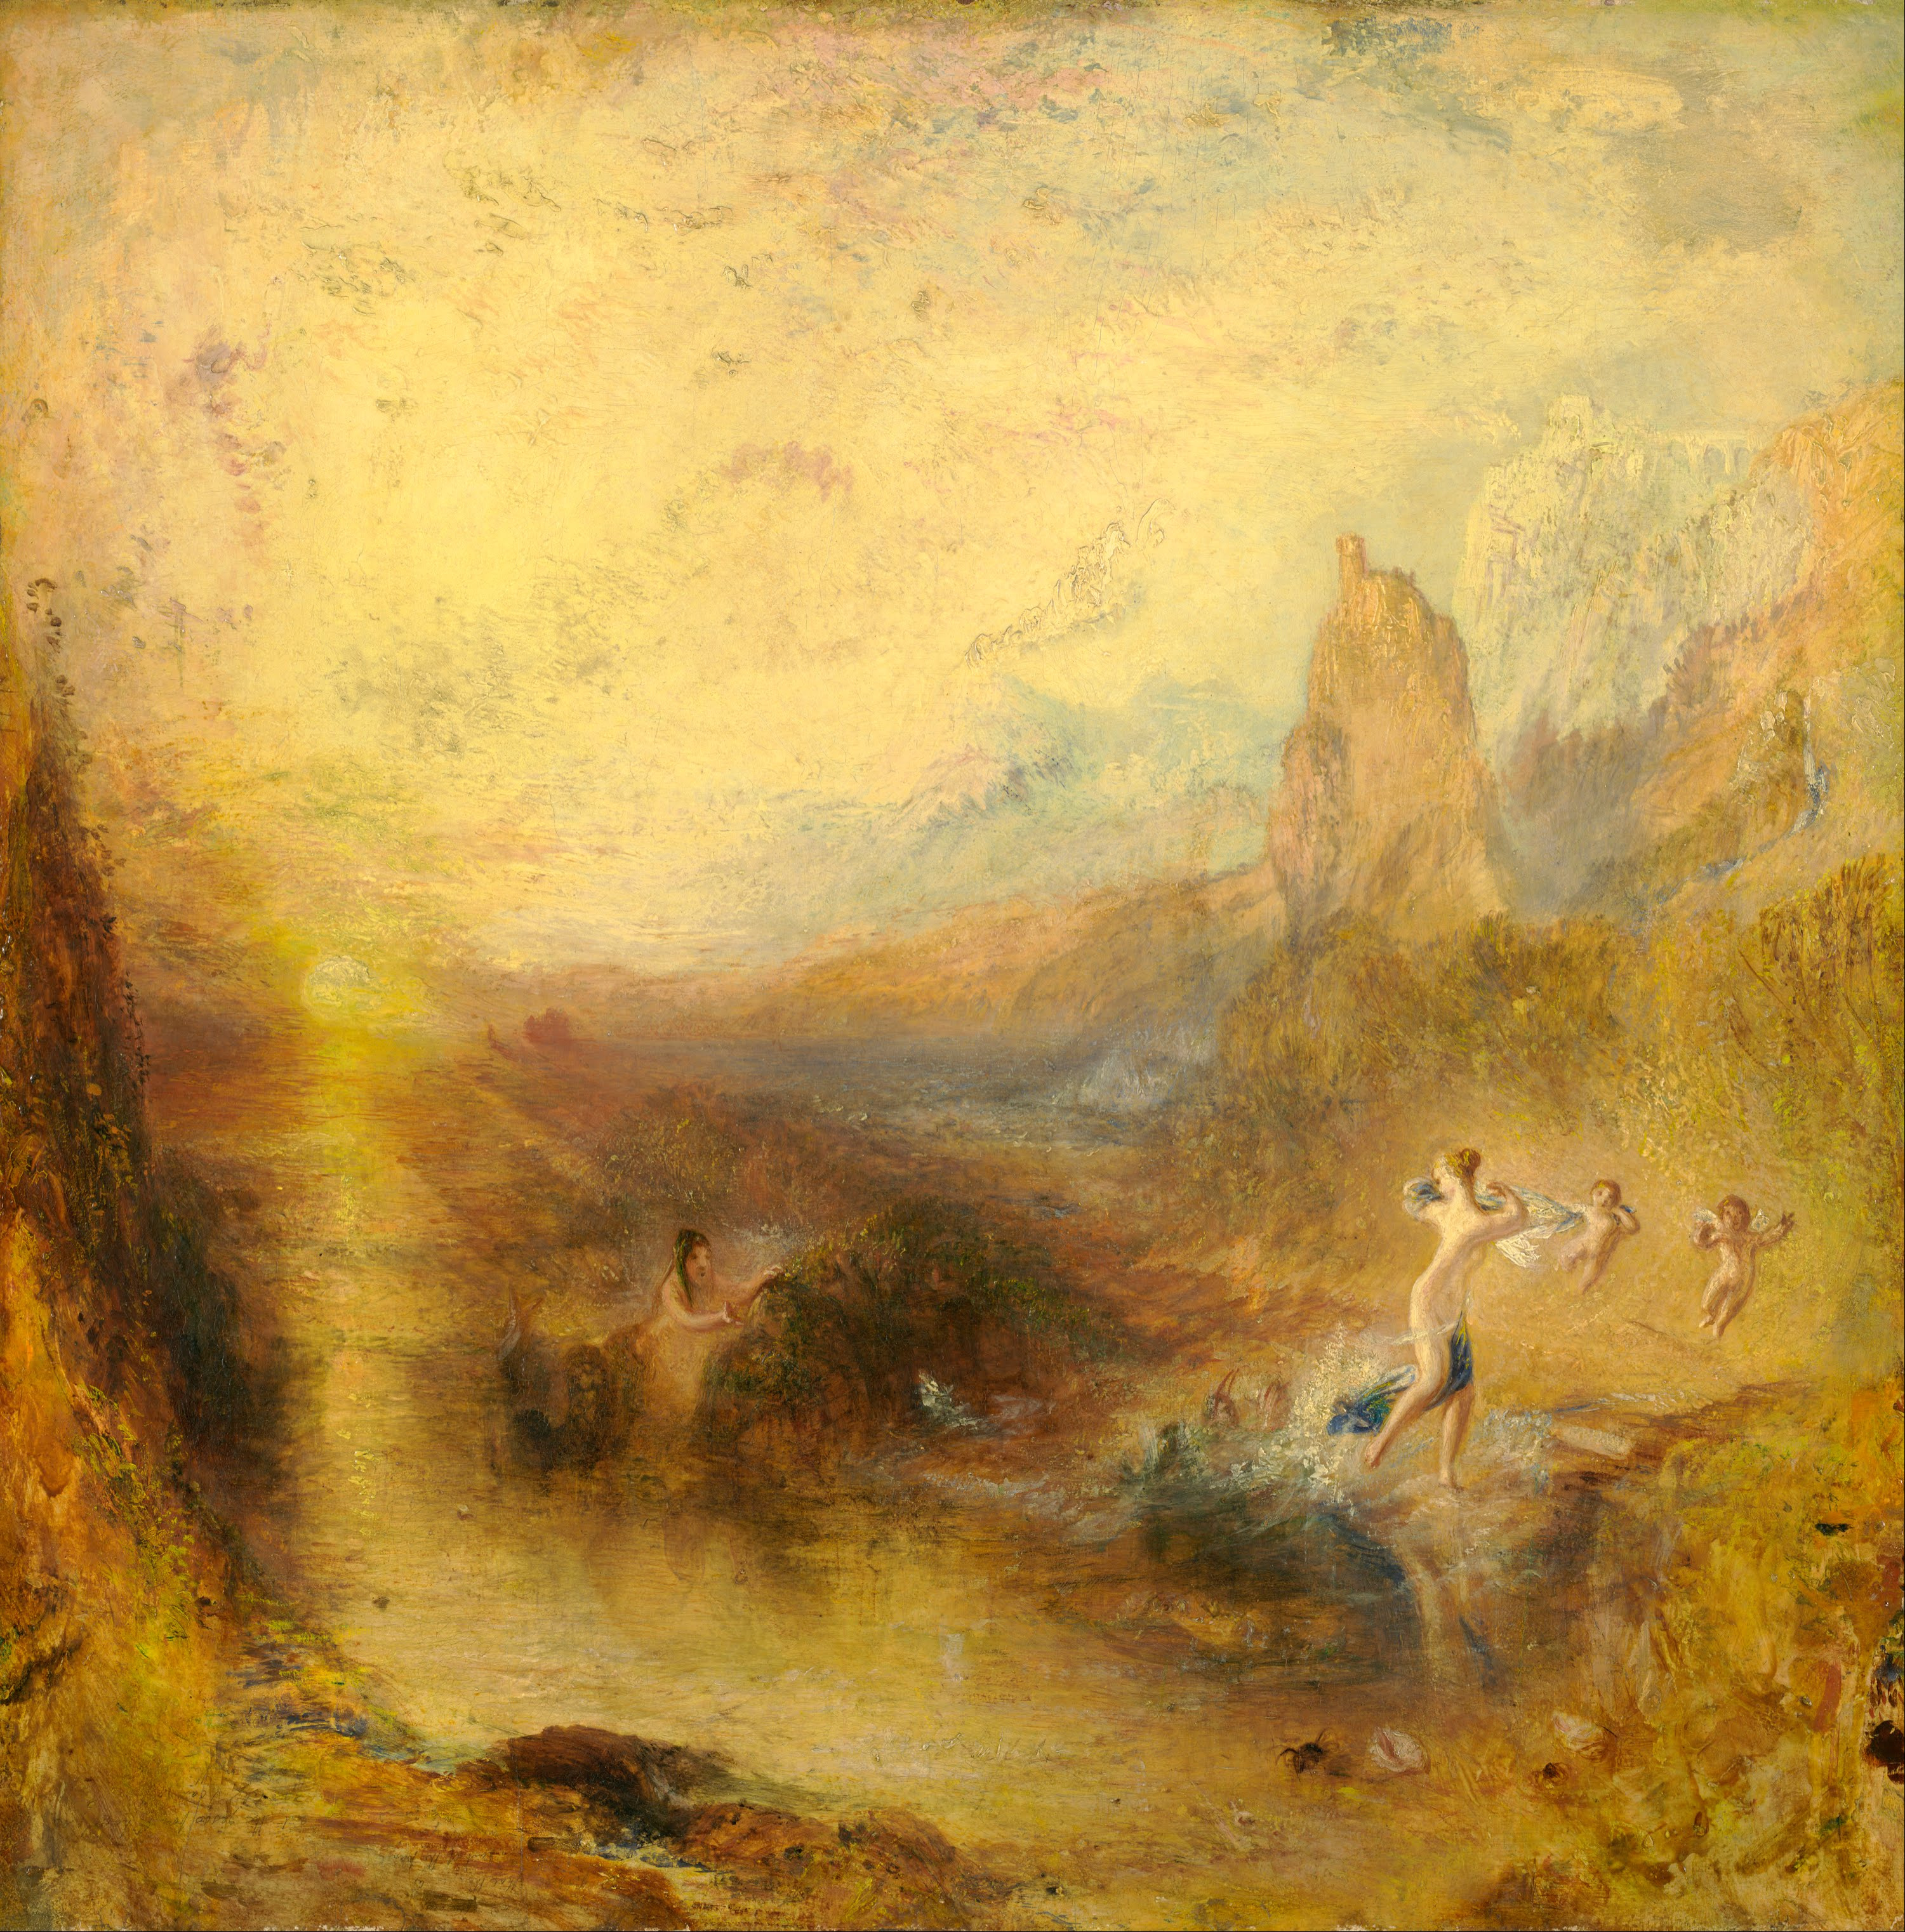 格勞科斯和斯庫拉 by Joseph Mallord William Turner - 1841 - 78.3 x 77.5 cm 